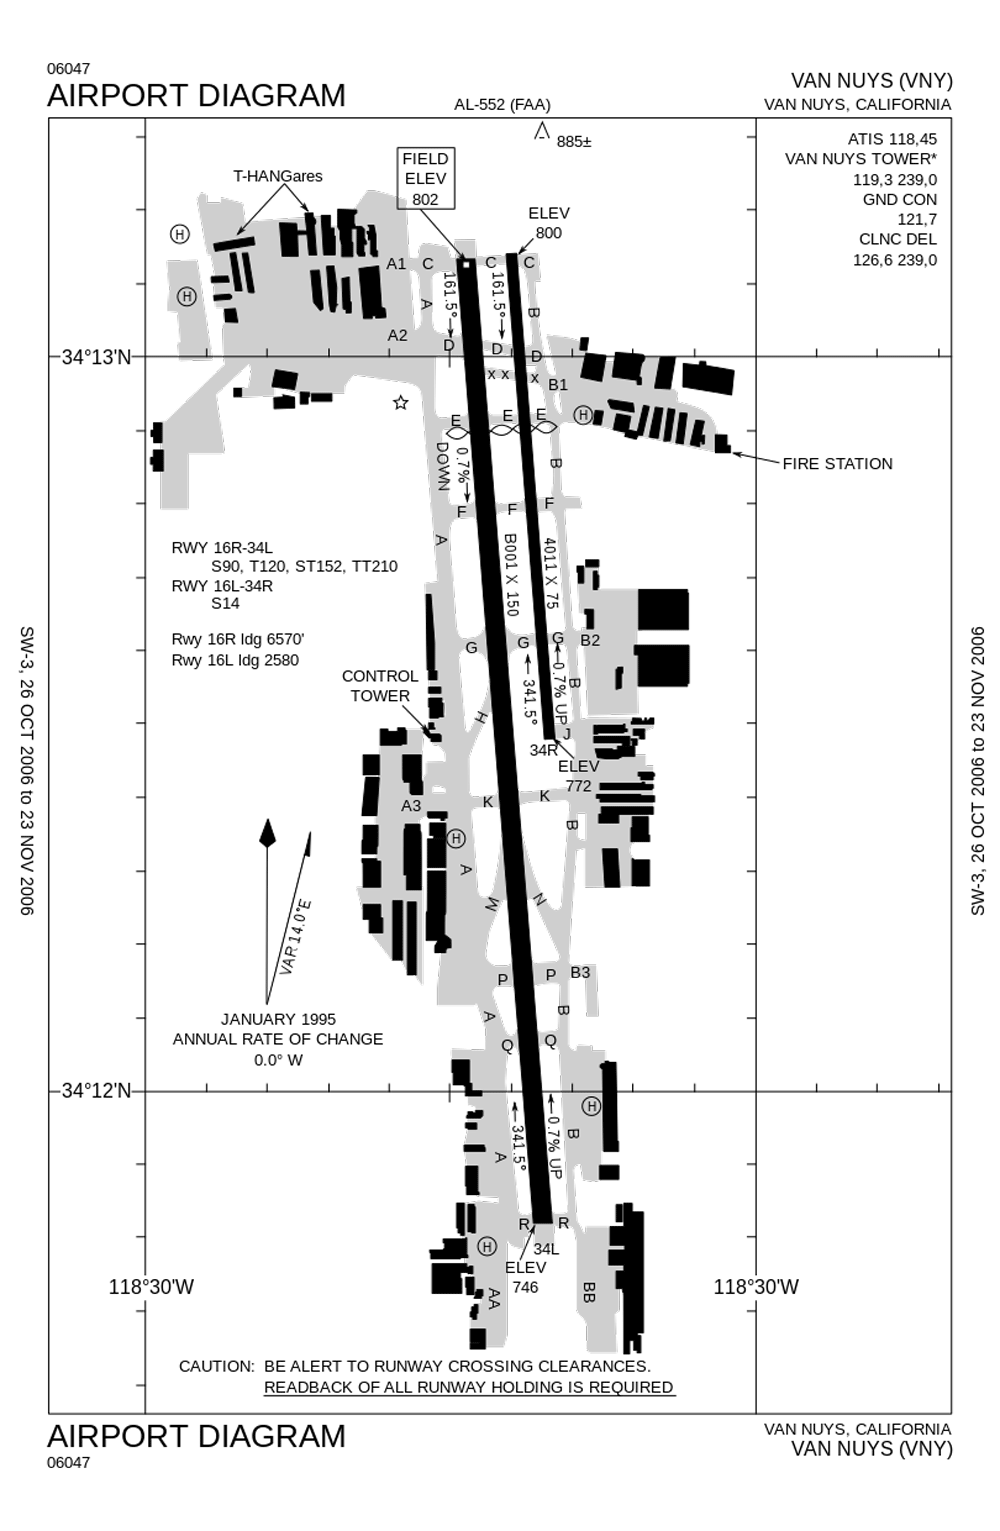 Van Nuys airport diagram